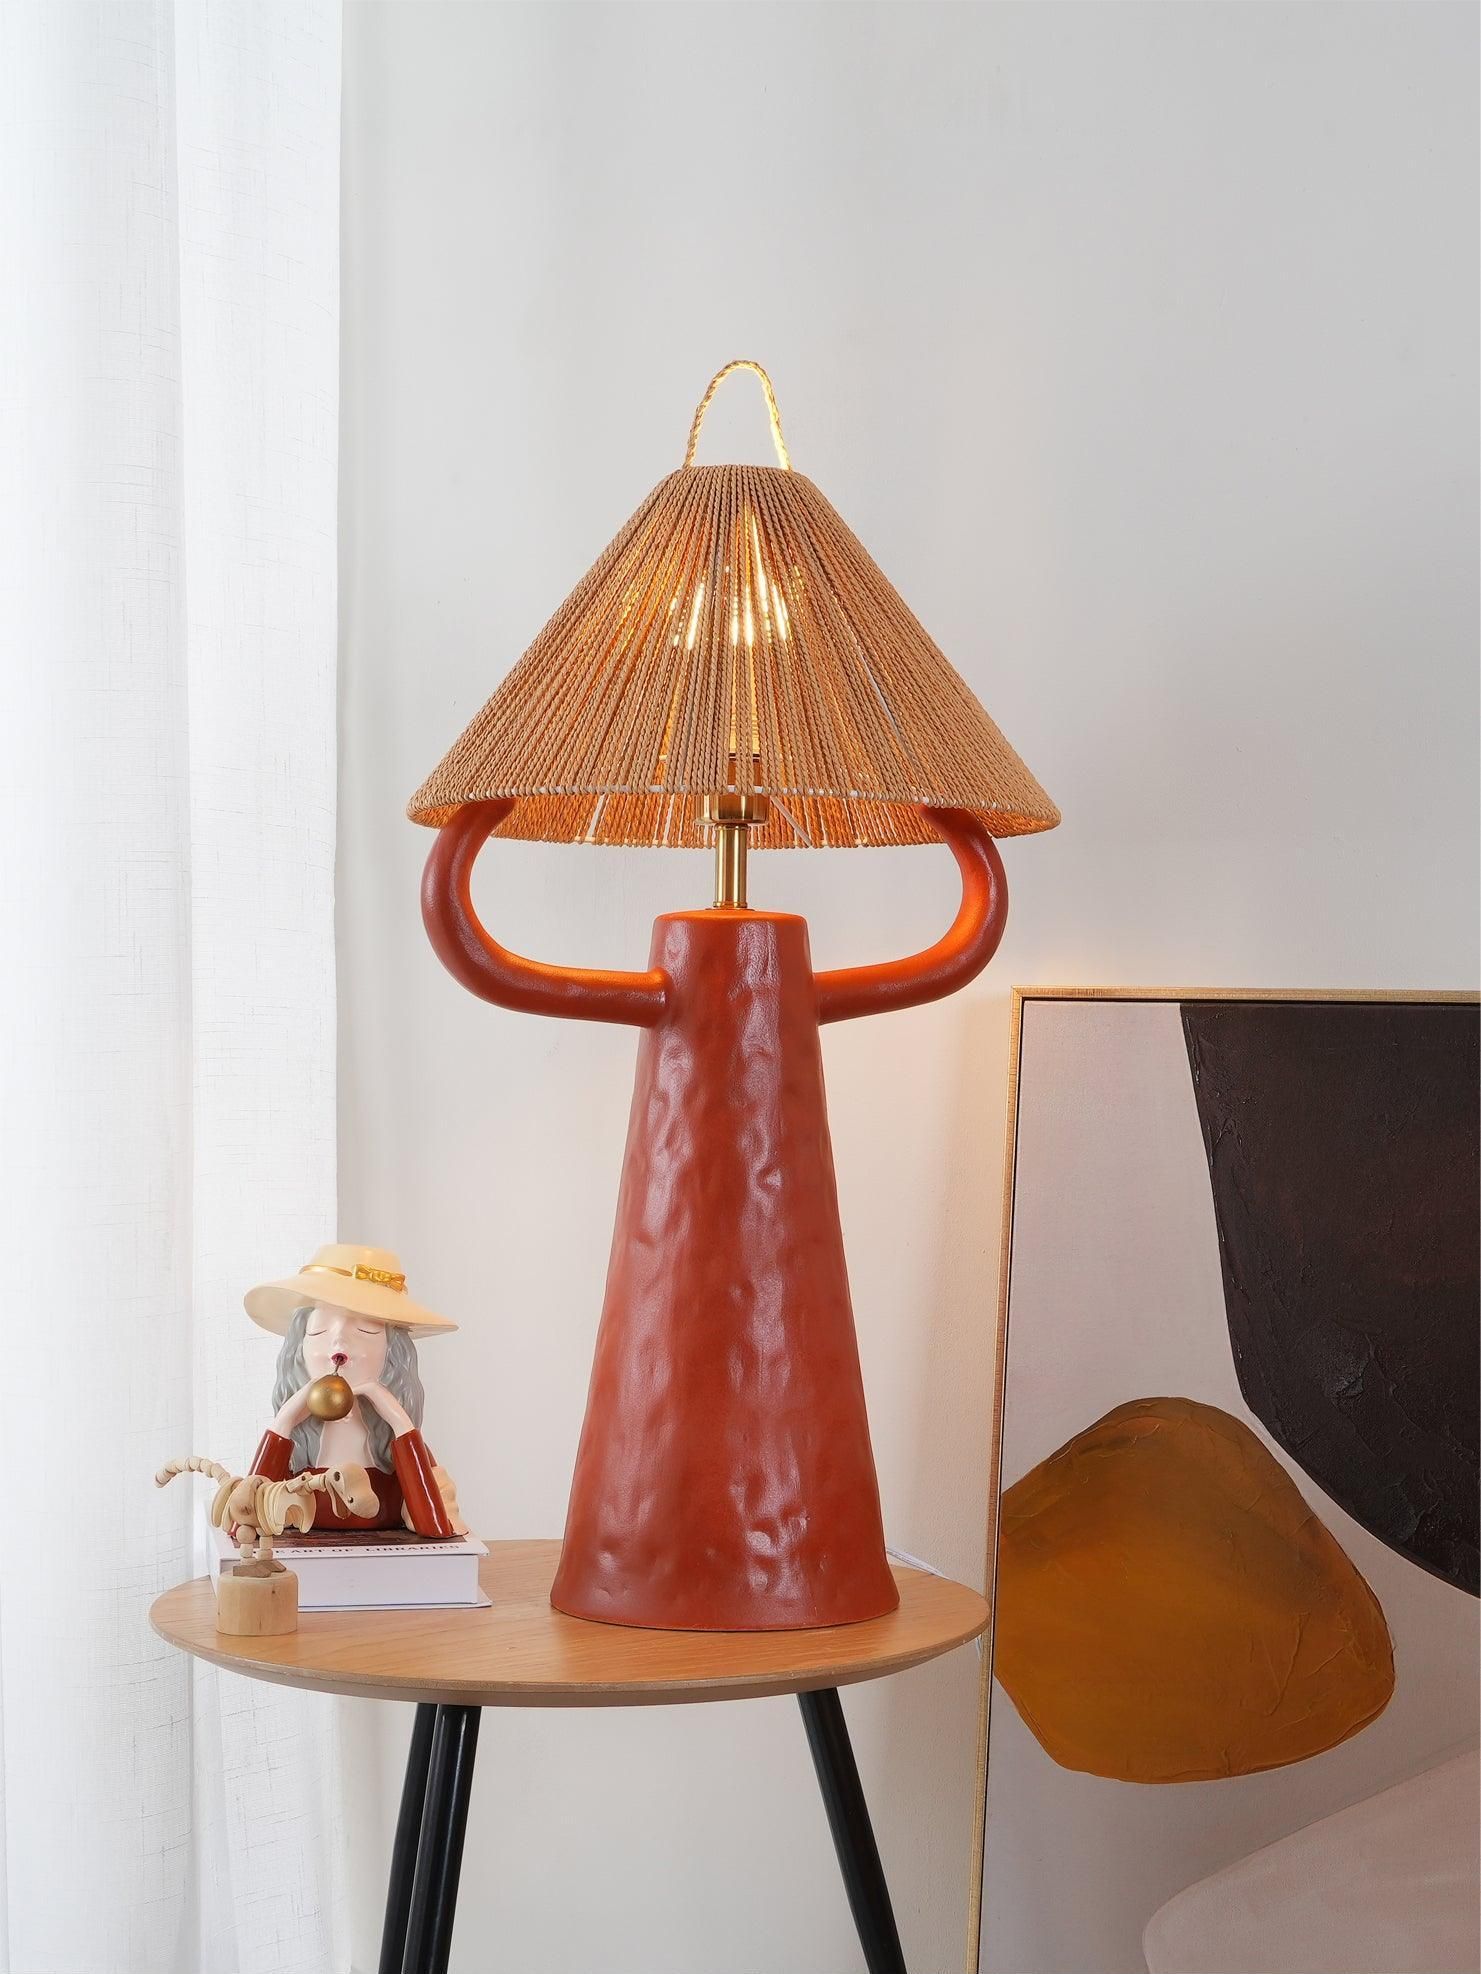 Ceramic Table Lamp Elegant Home Decor Lighting Option made of Durable Material